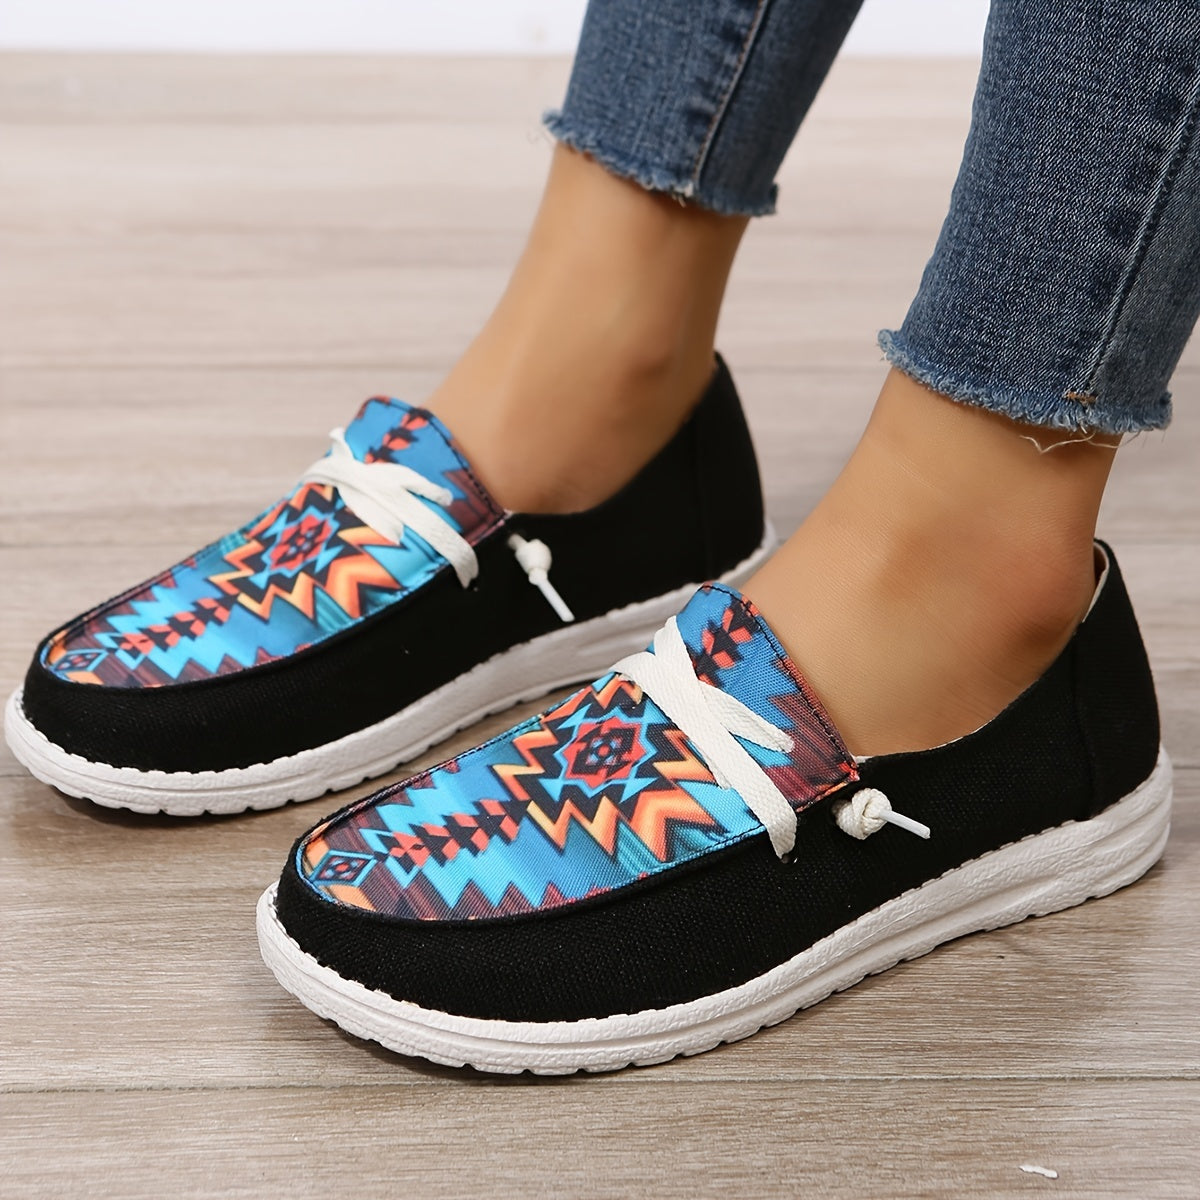 Women's Geometric Flat Canvas Shoes, Black Lightweight Non-slip Low Top Shoes, Casual Walking Shoes